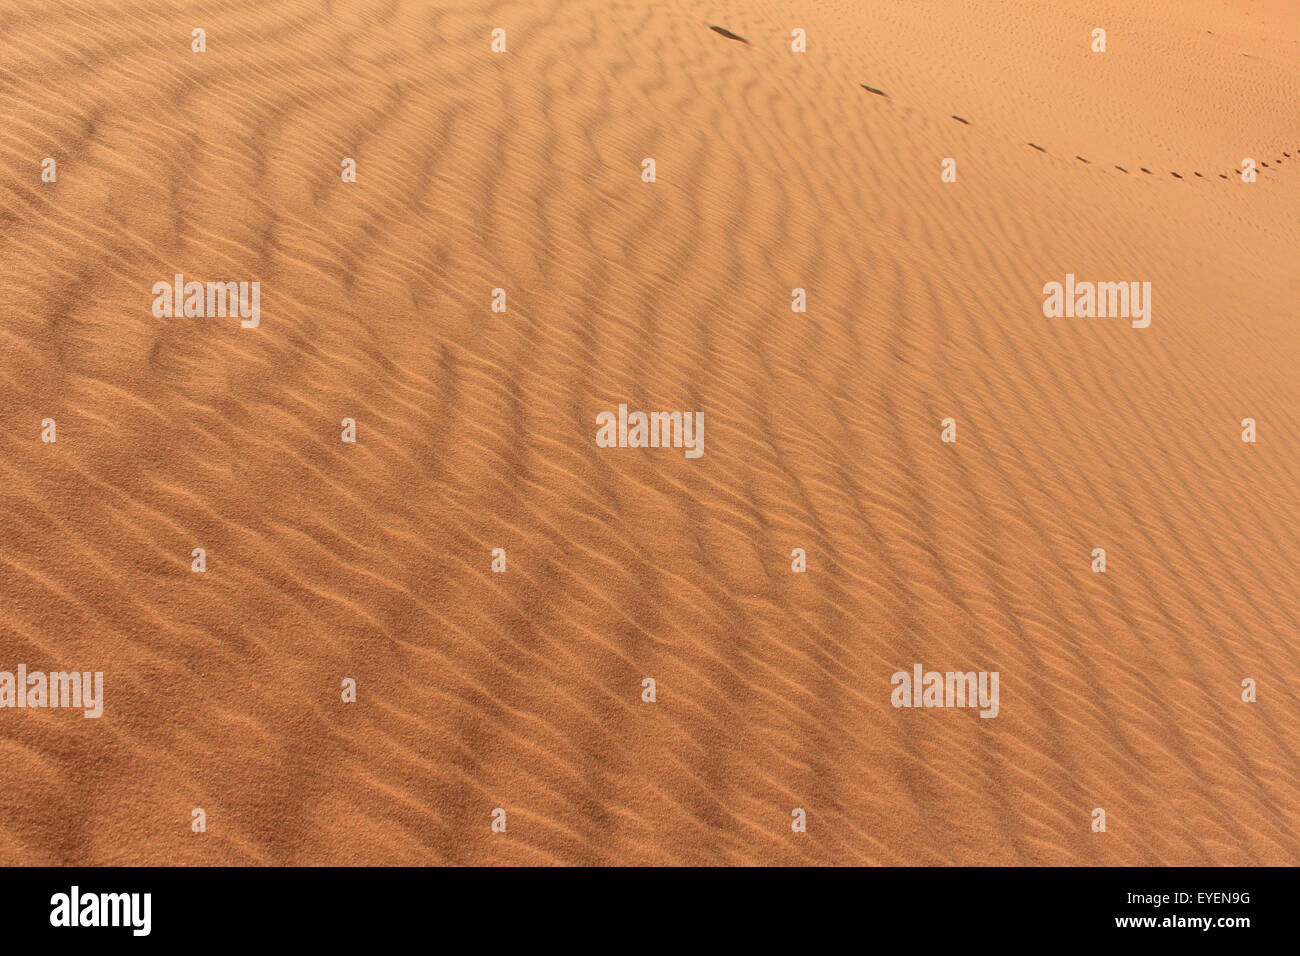 desert sand texture with footprints Stock Photo